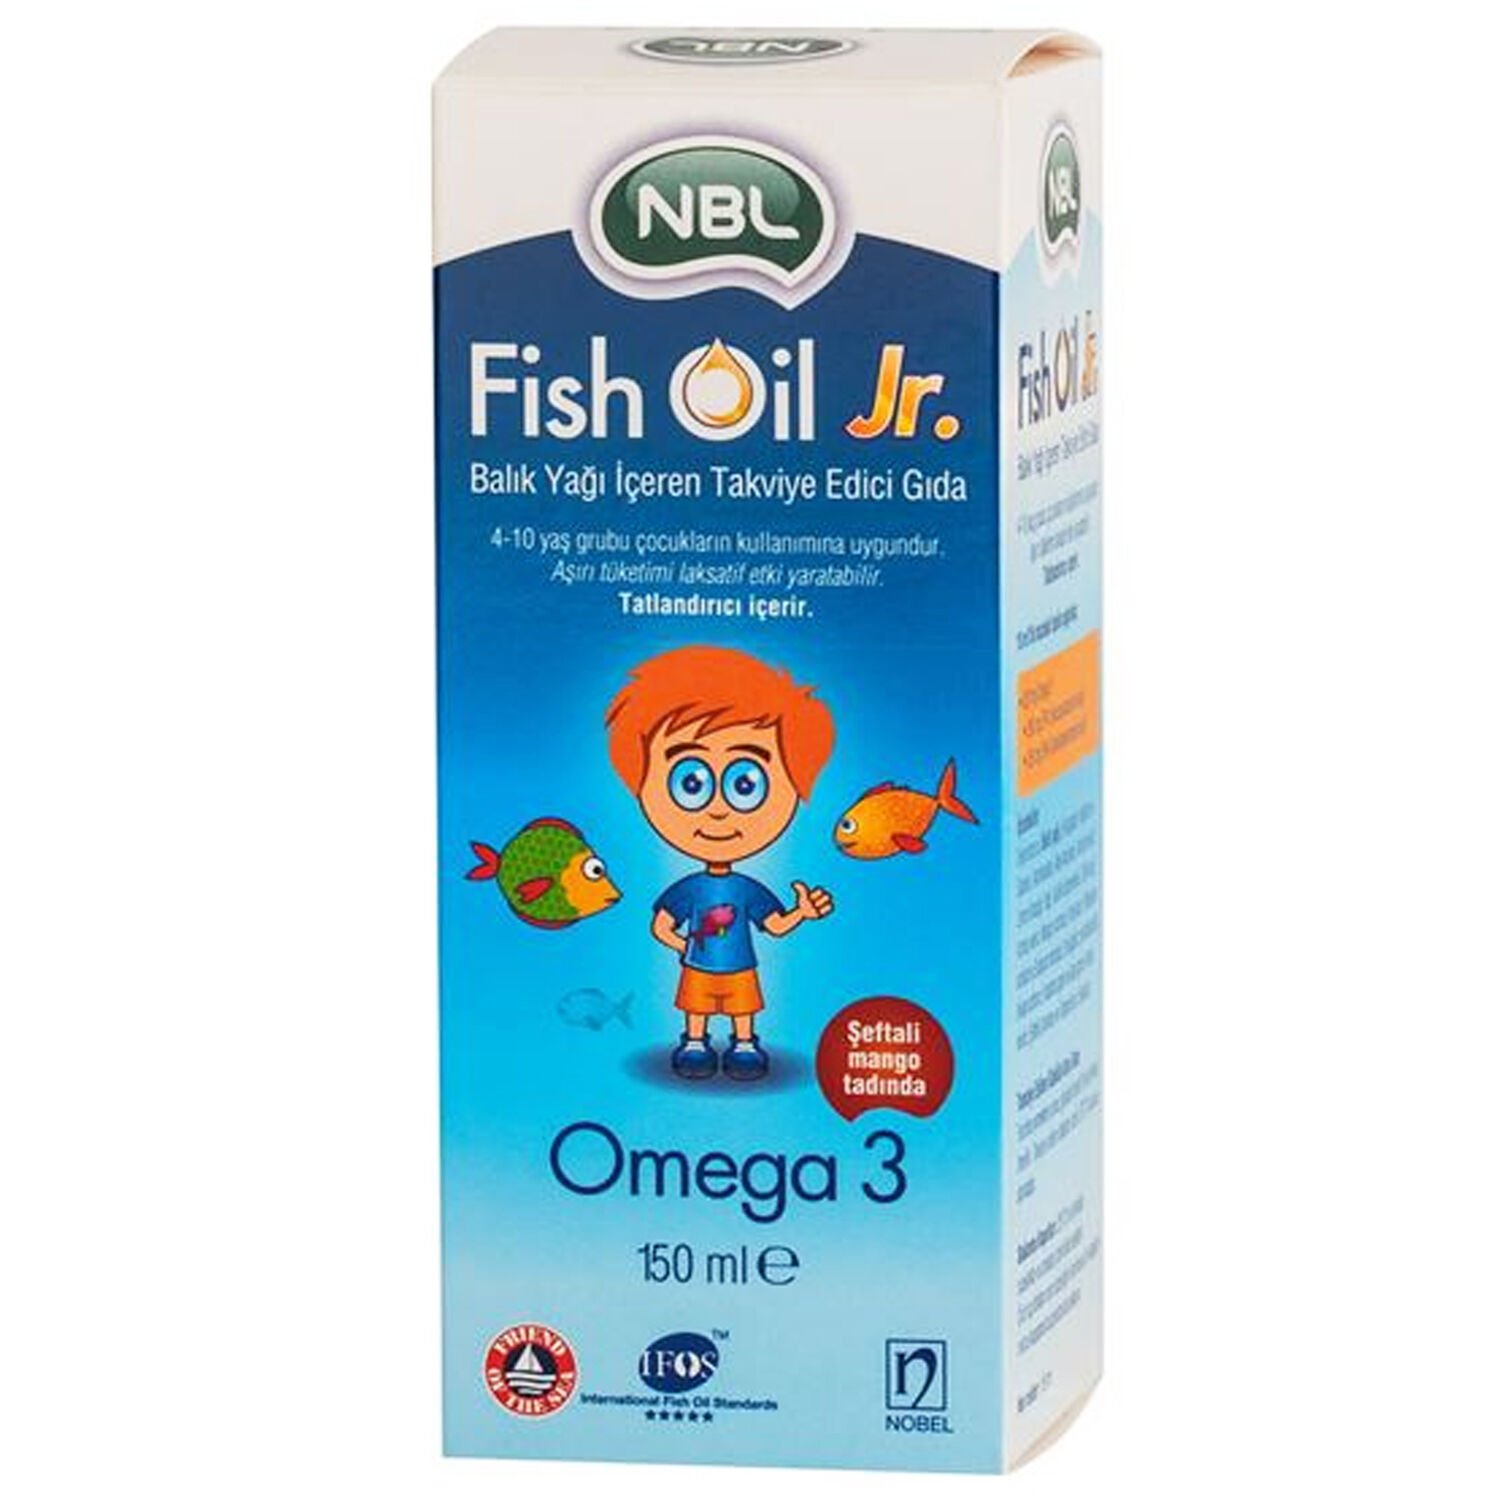 NBL Fish Oil Jr. Omega 3 Balık Yağı 150 ml